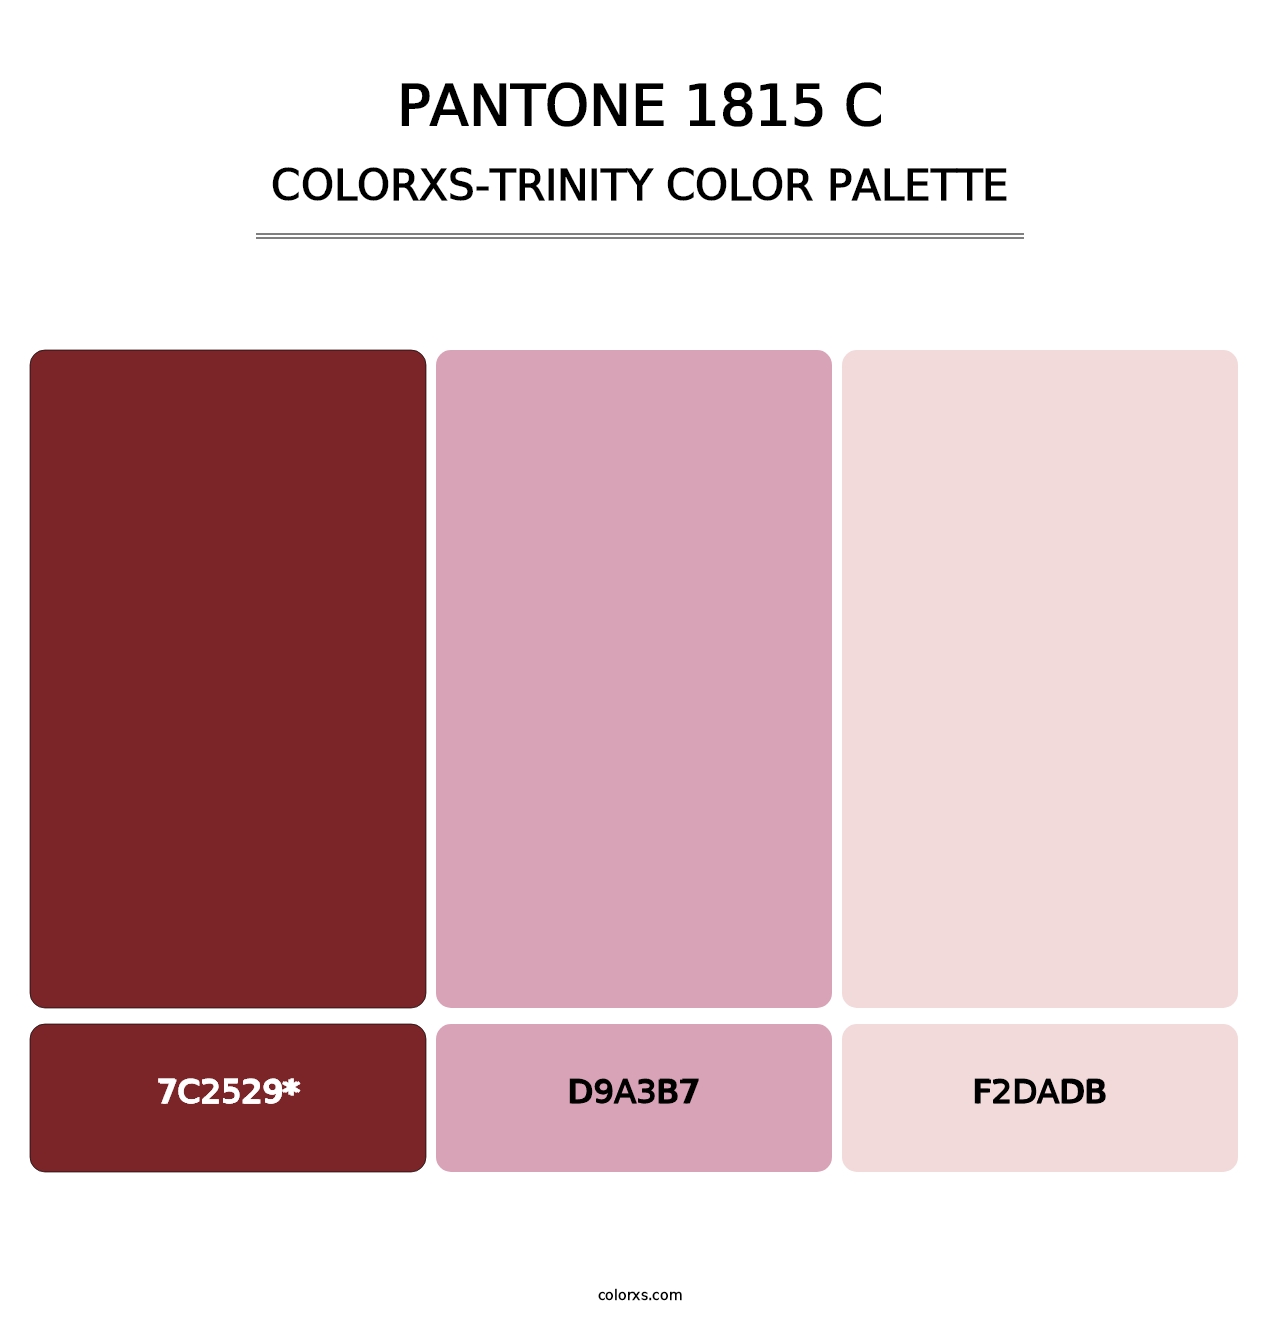 PANTONE 1815 C - Colorxs Trinity Palette